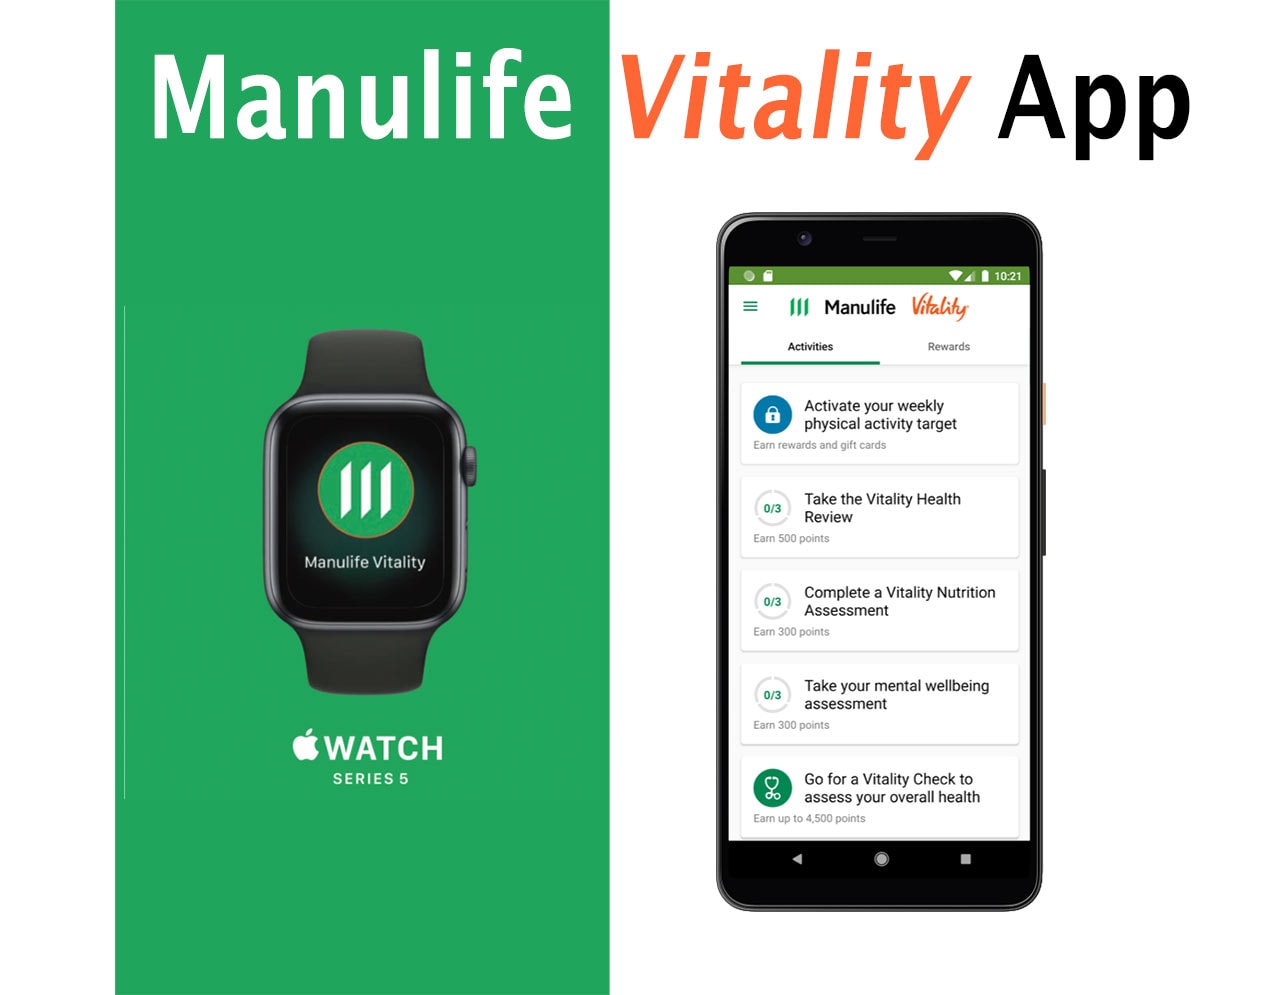 manulife vitality app image